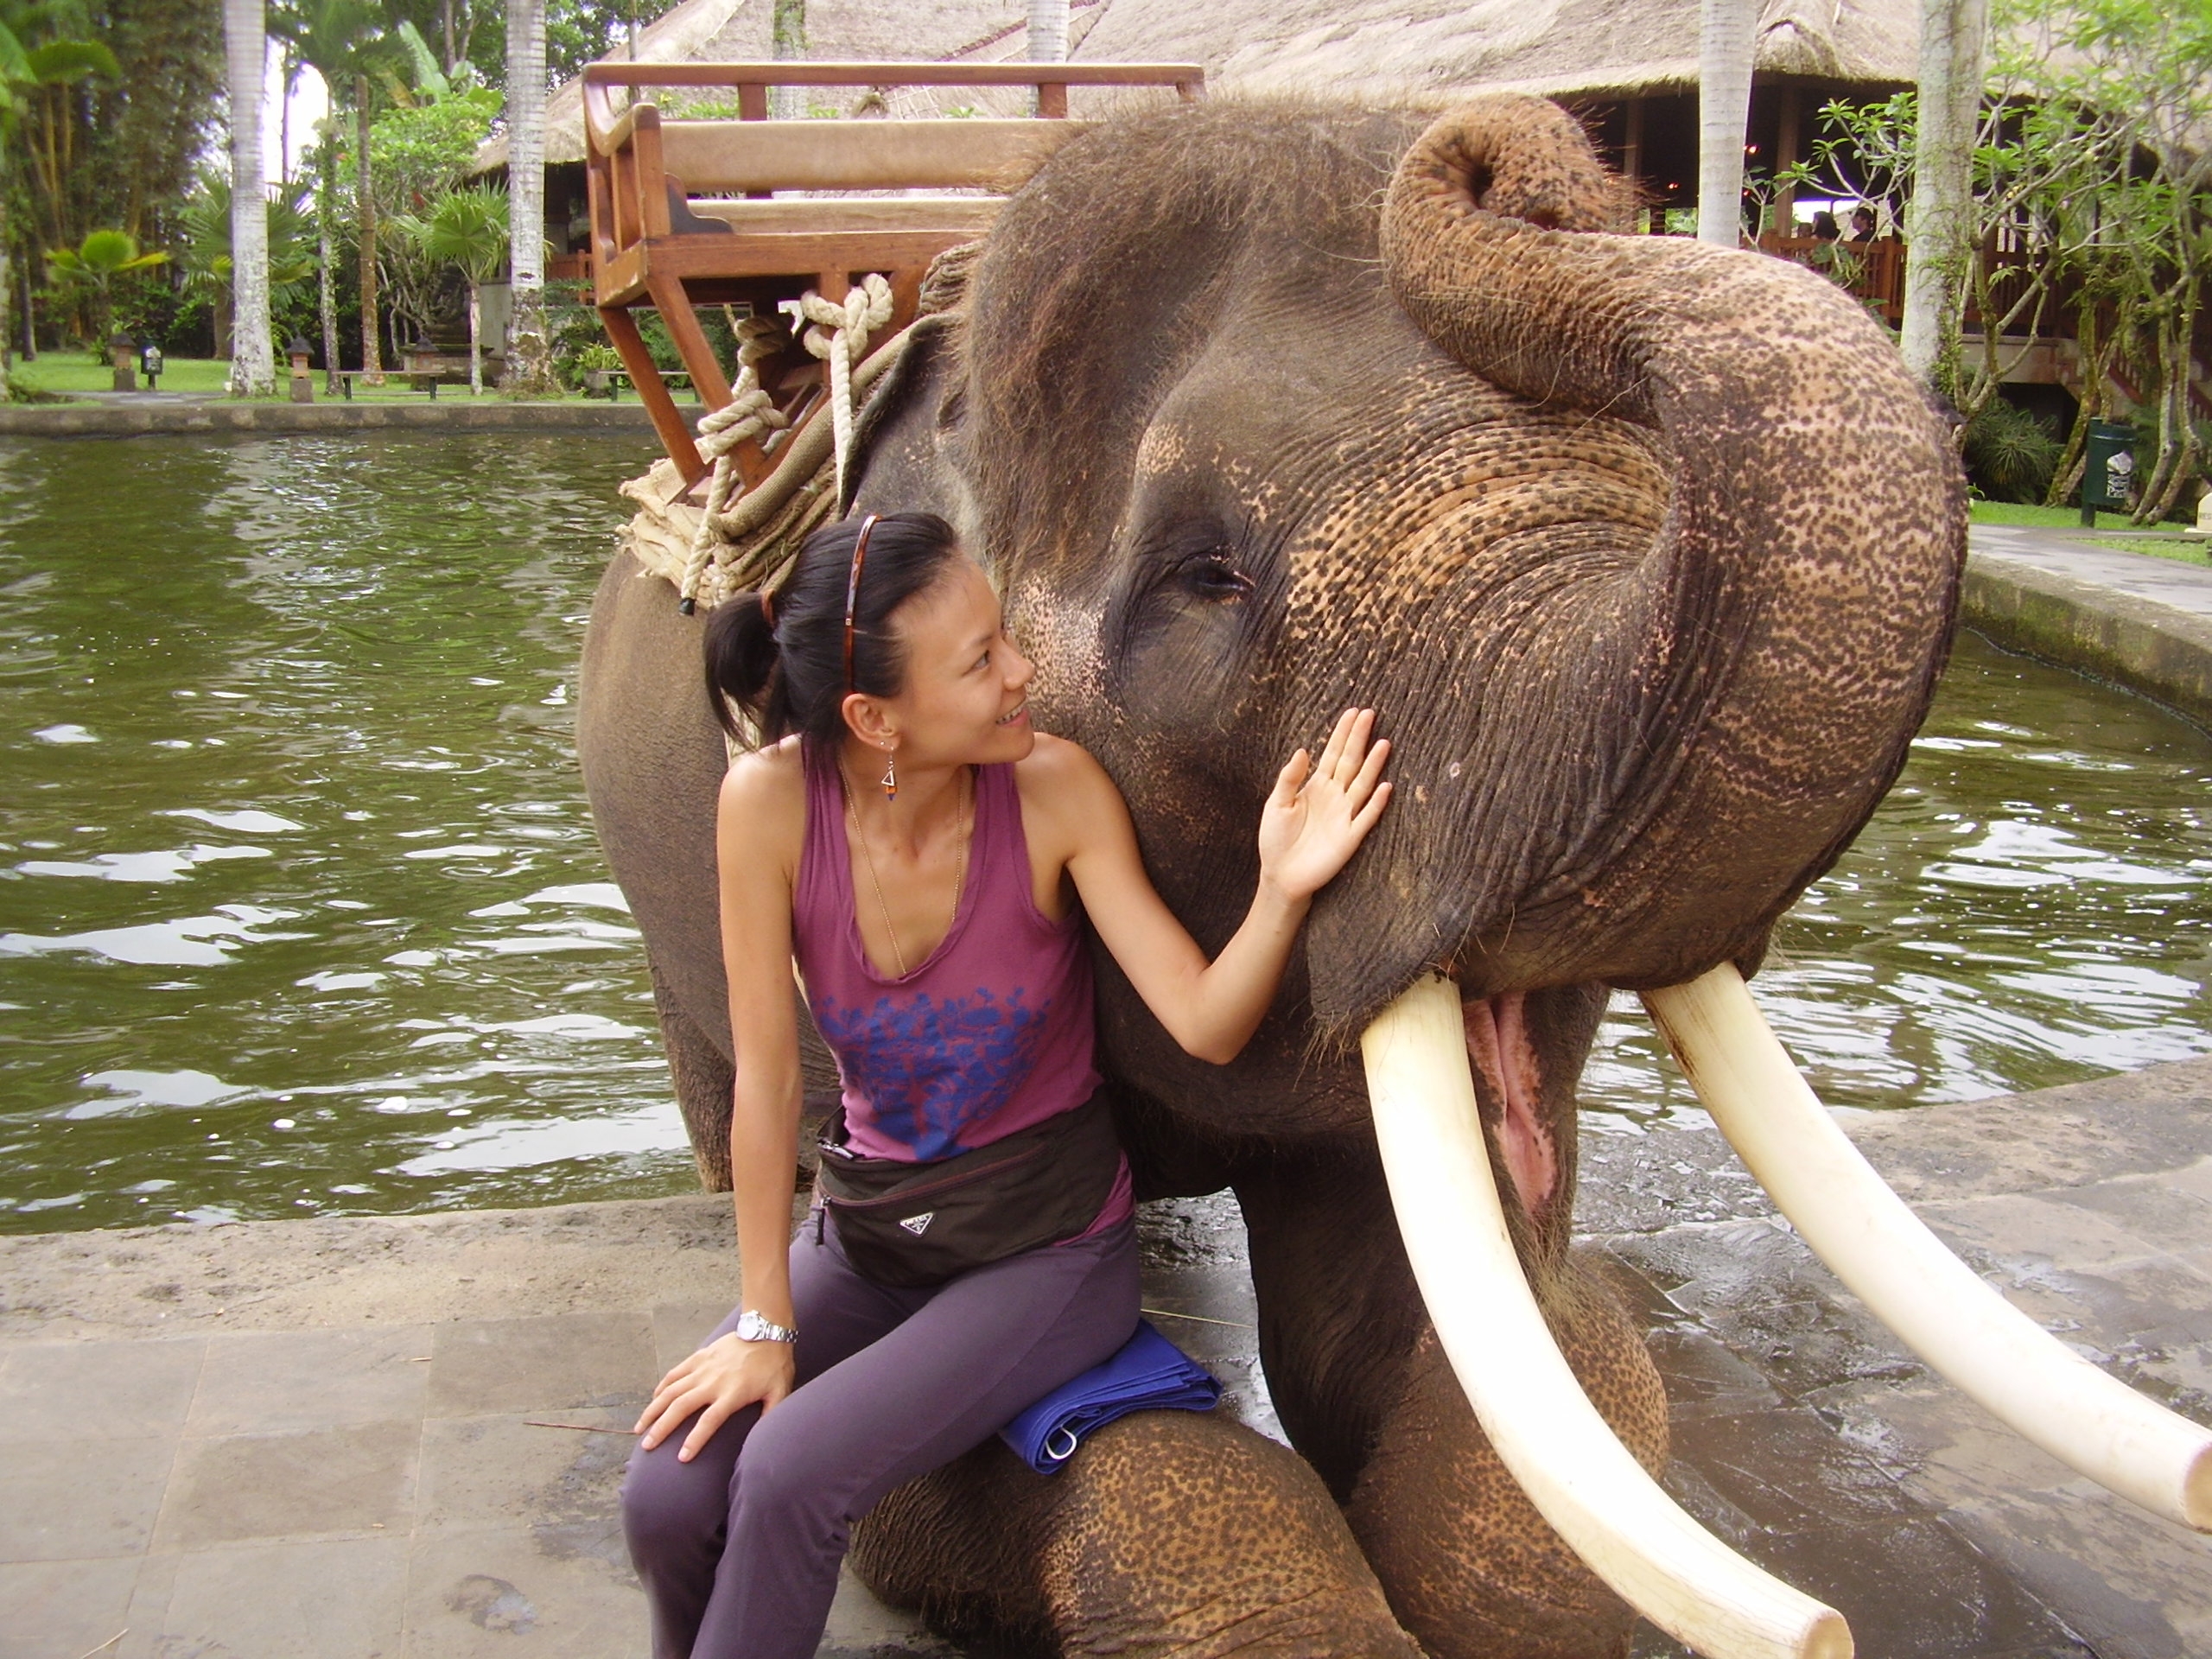 http://www.traveltoenlightenment.com/bali_images/christine_with_elephant_big.JPG